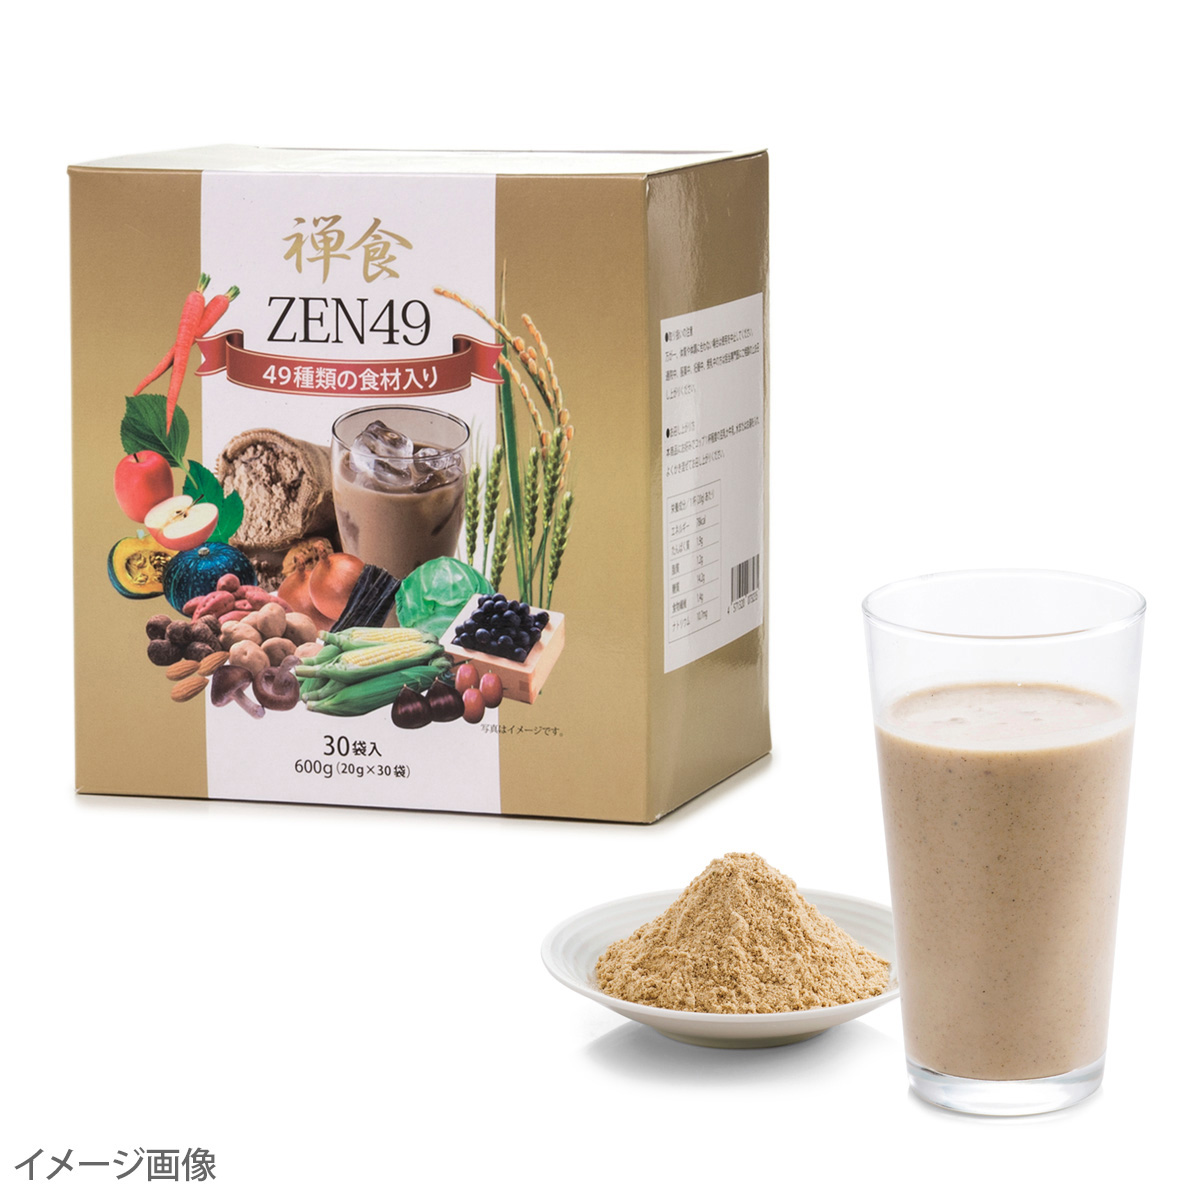 ZEN49 ダイエット禅食 お得な2箱セット シェイカー付き - QVC.jp